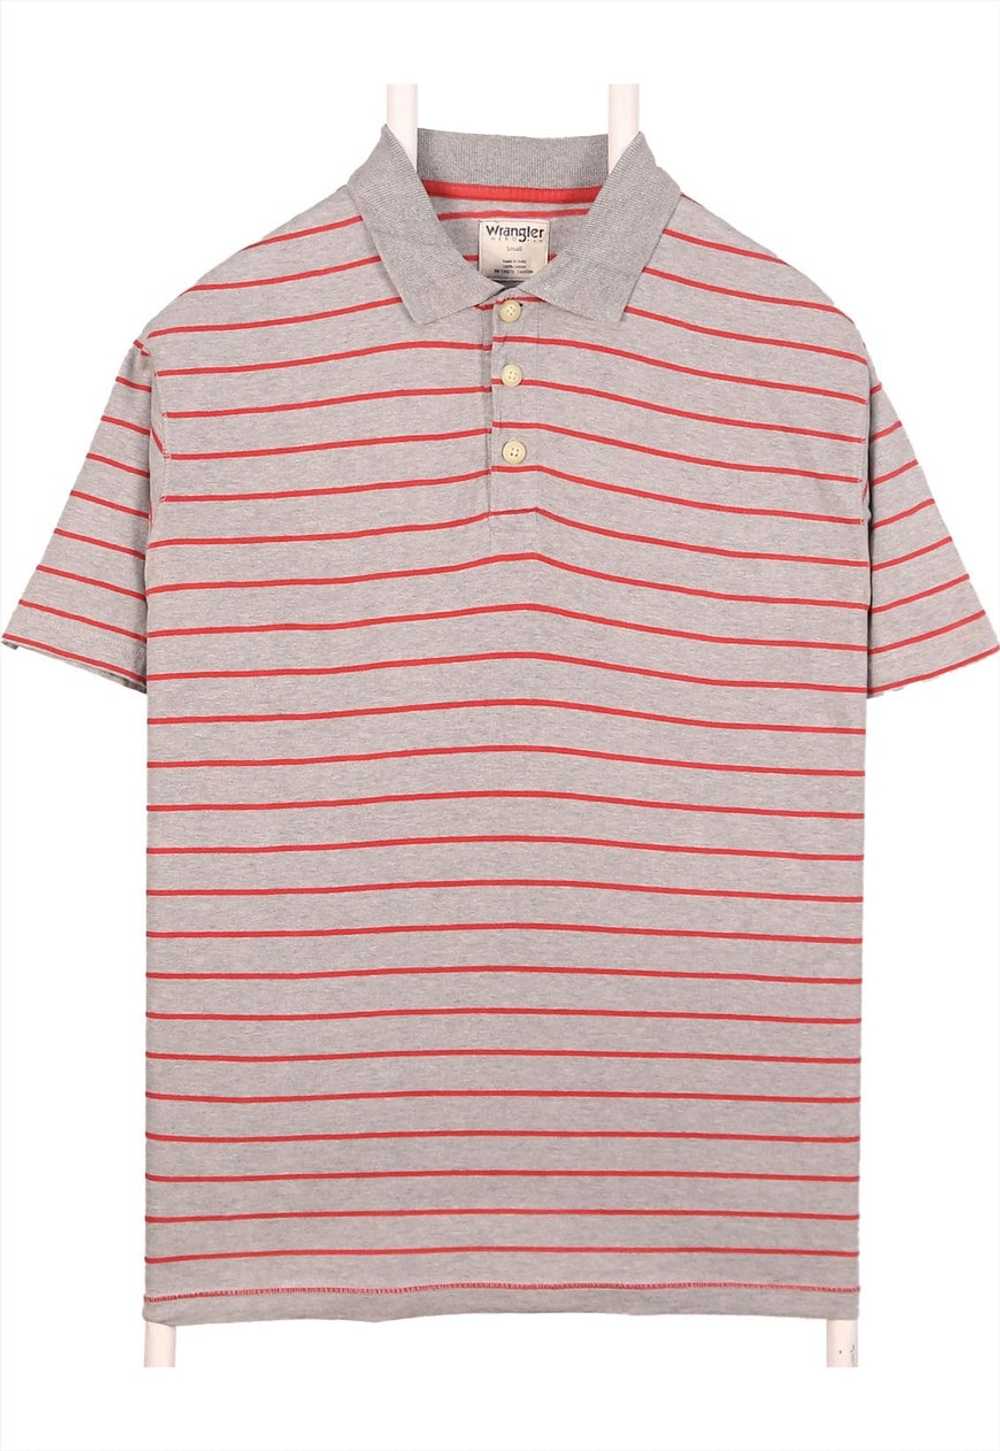 Vintage 90's Wrangler Polo Shirt Striped Short Sl… - image 1